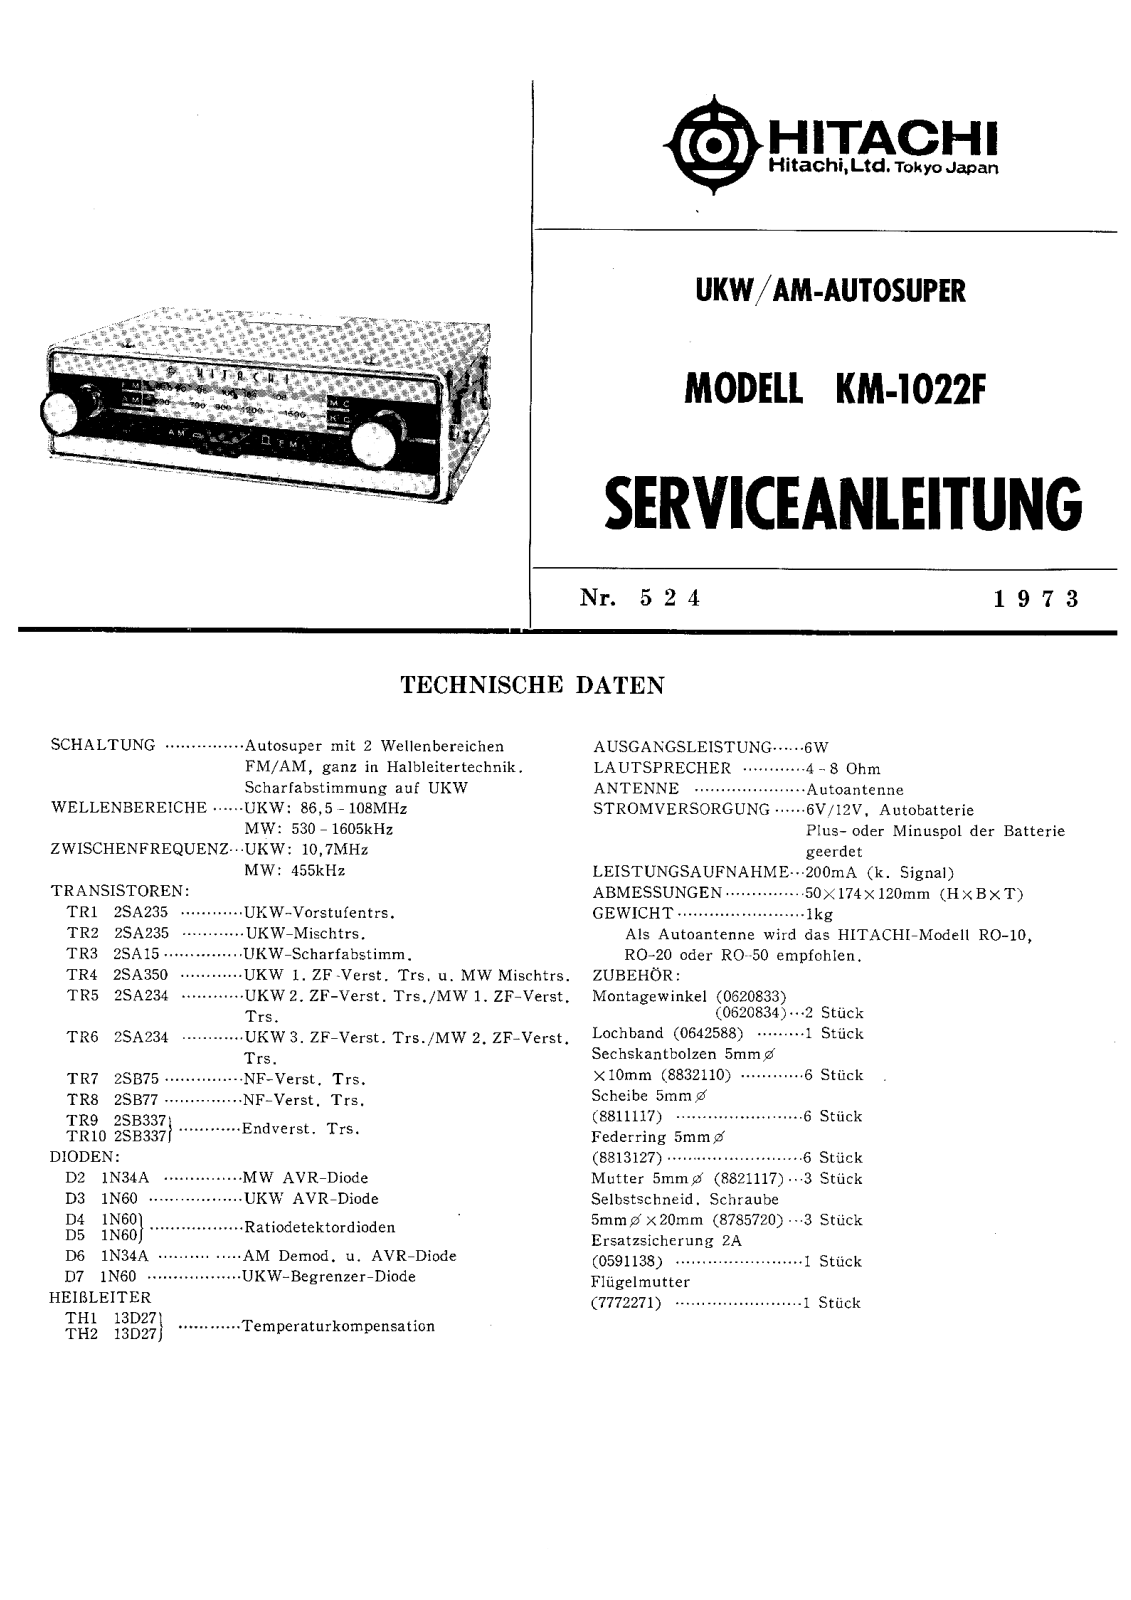 Hitachi KM-1022-F Service Manual